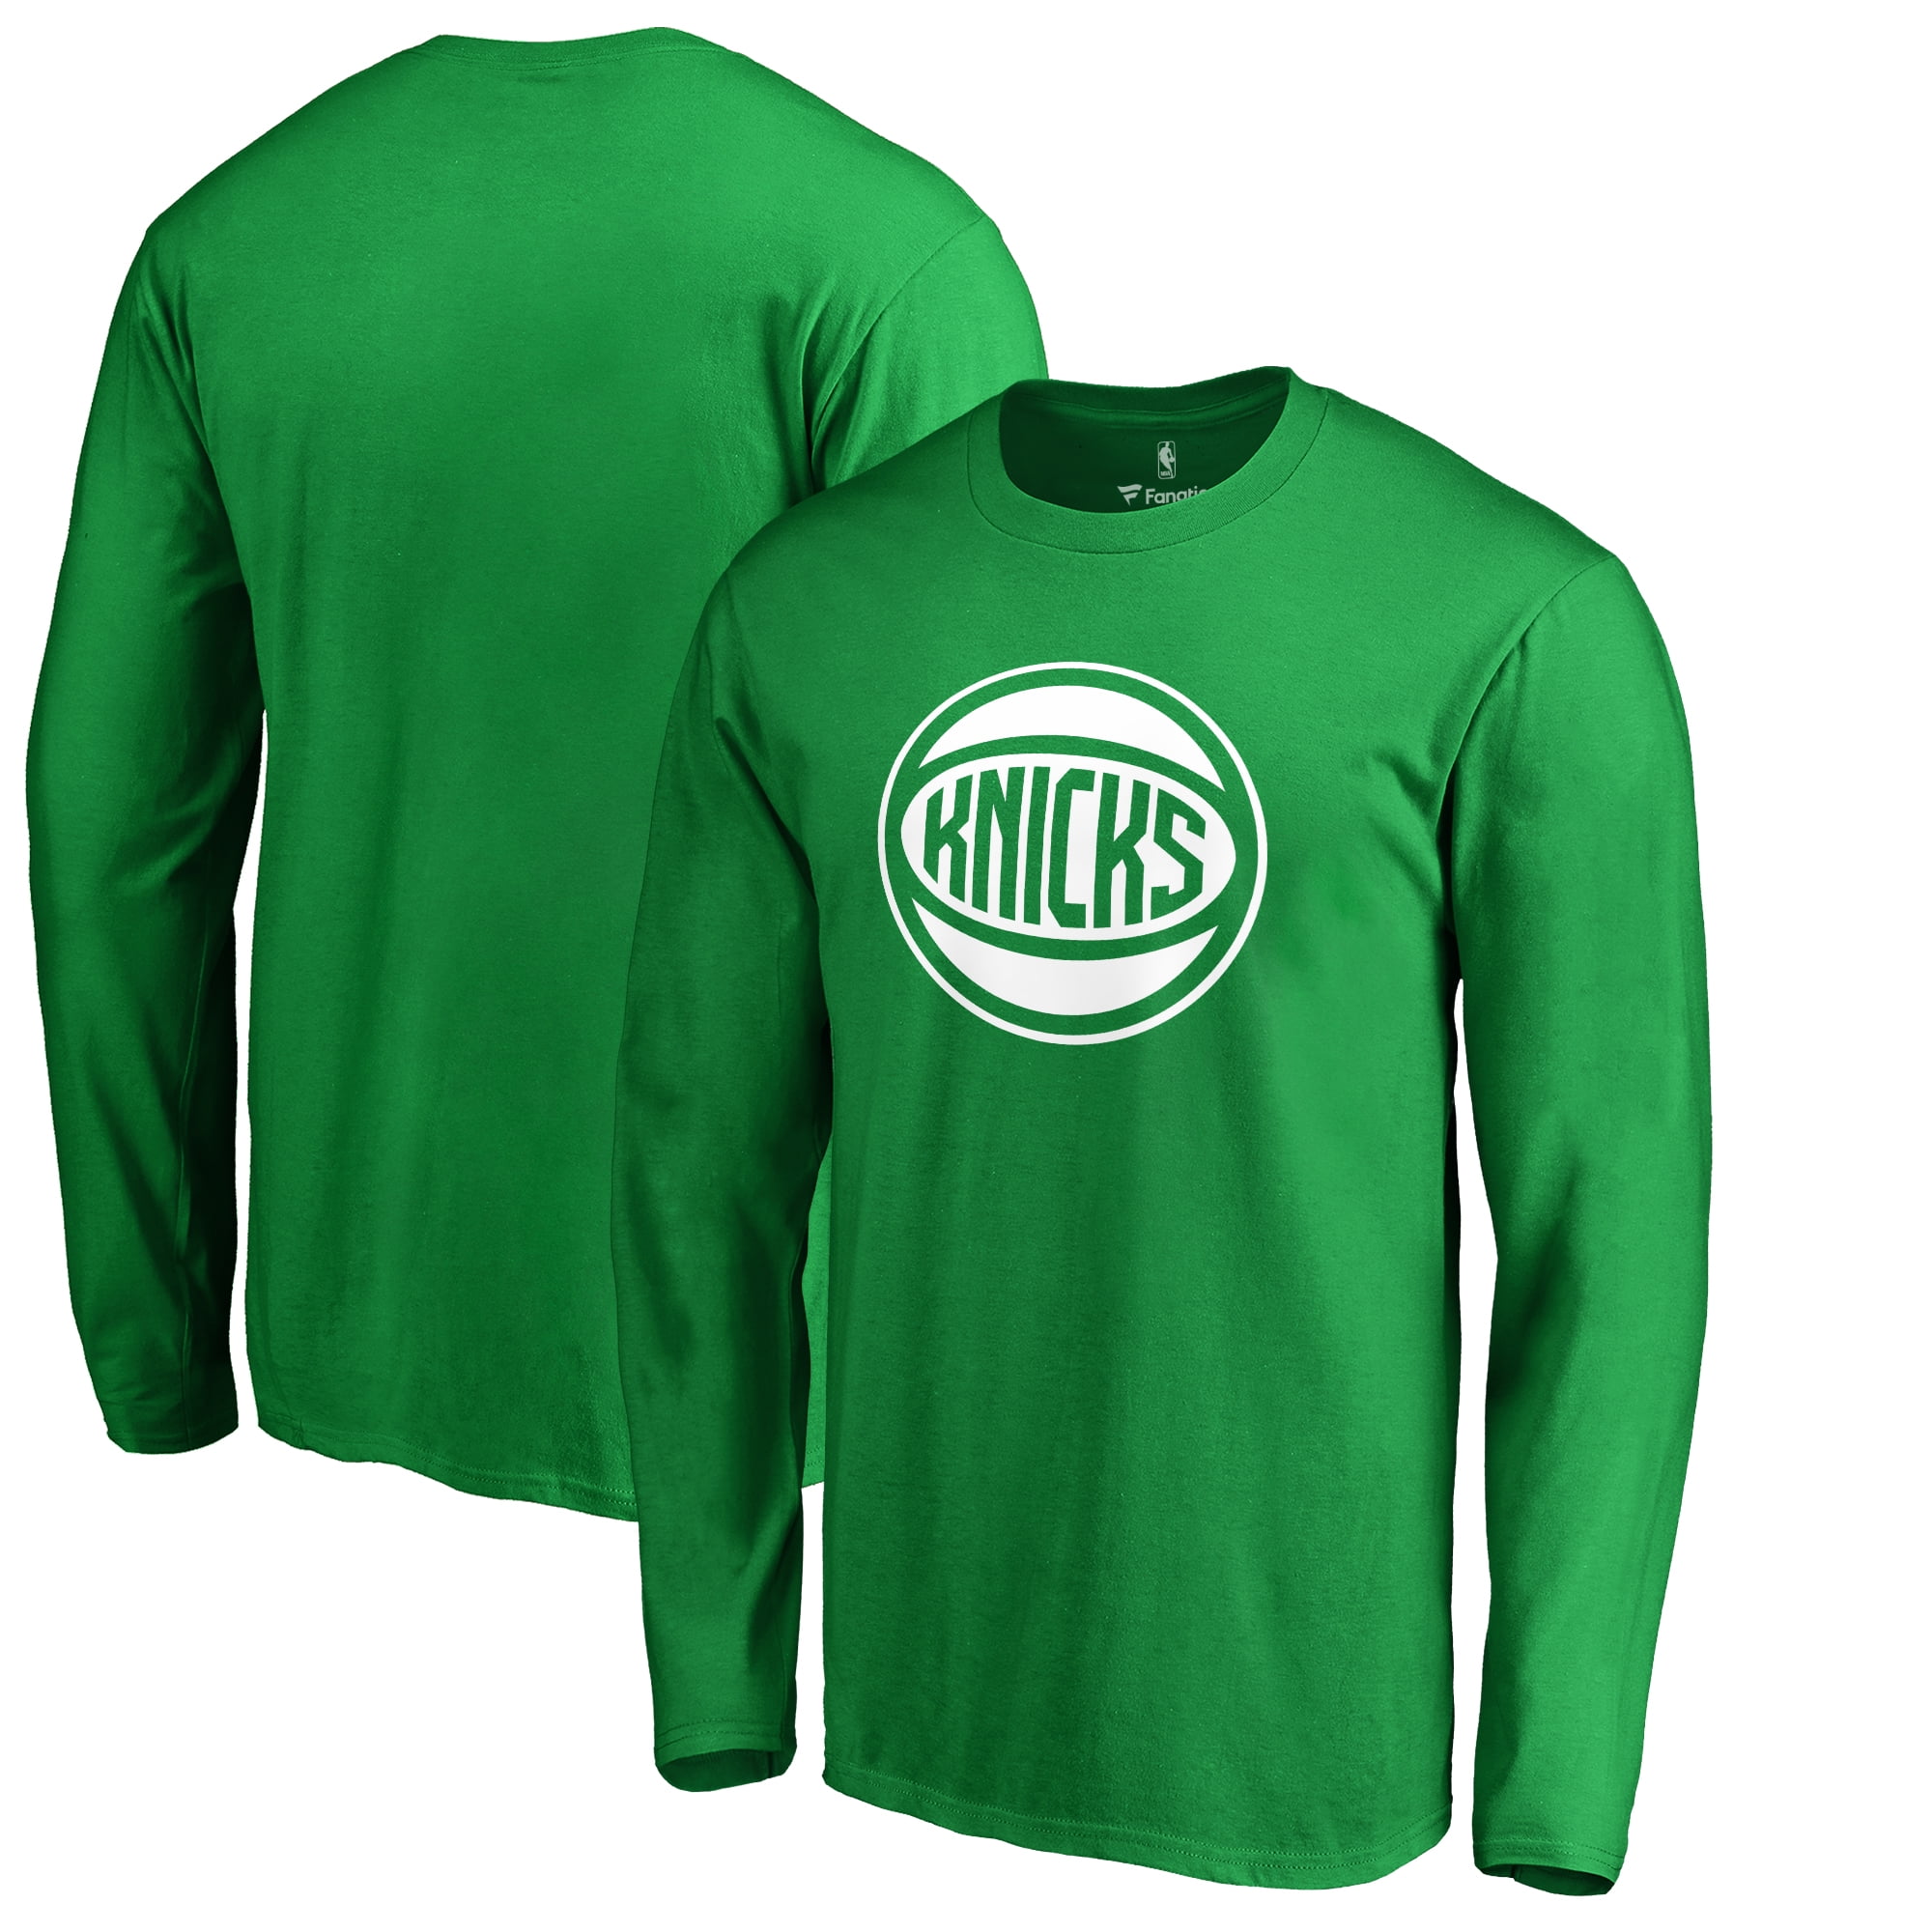 green knicks jersey